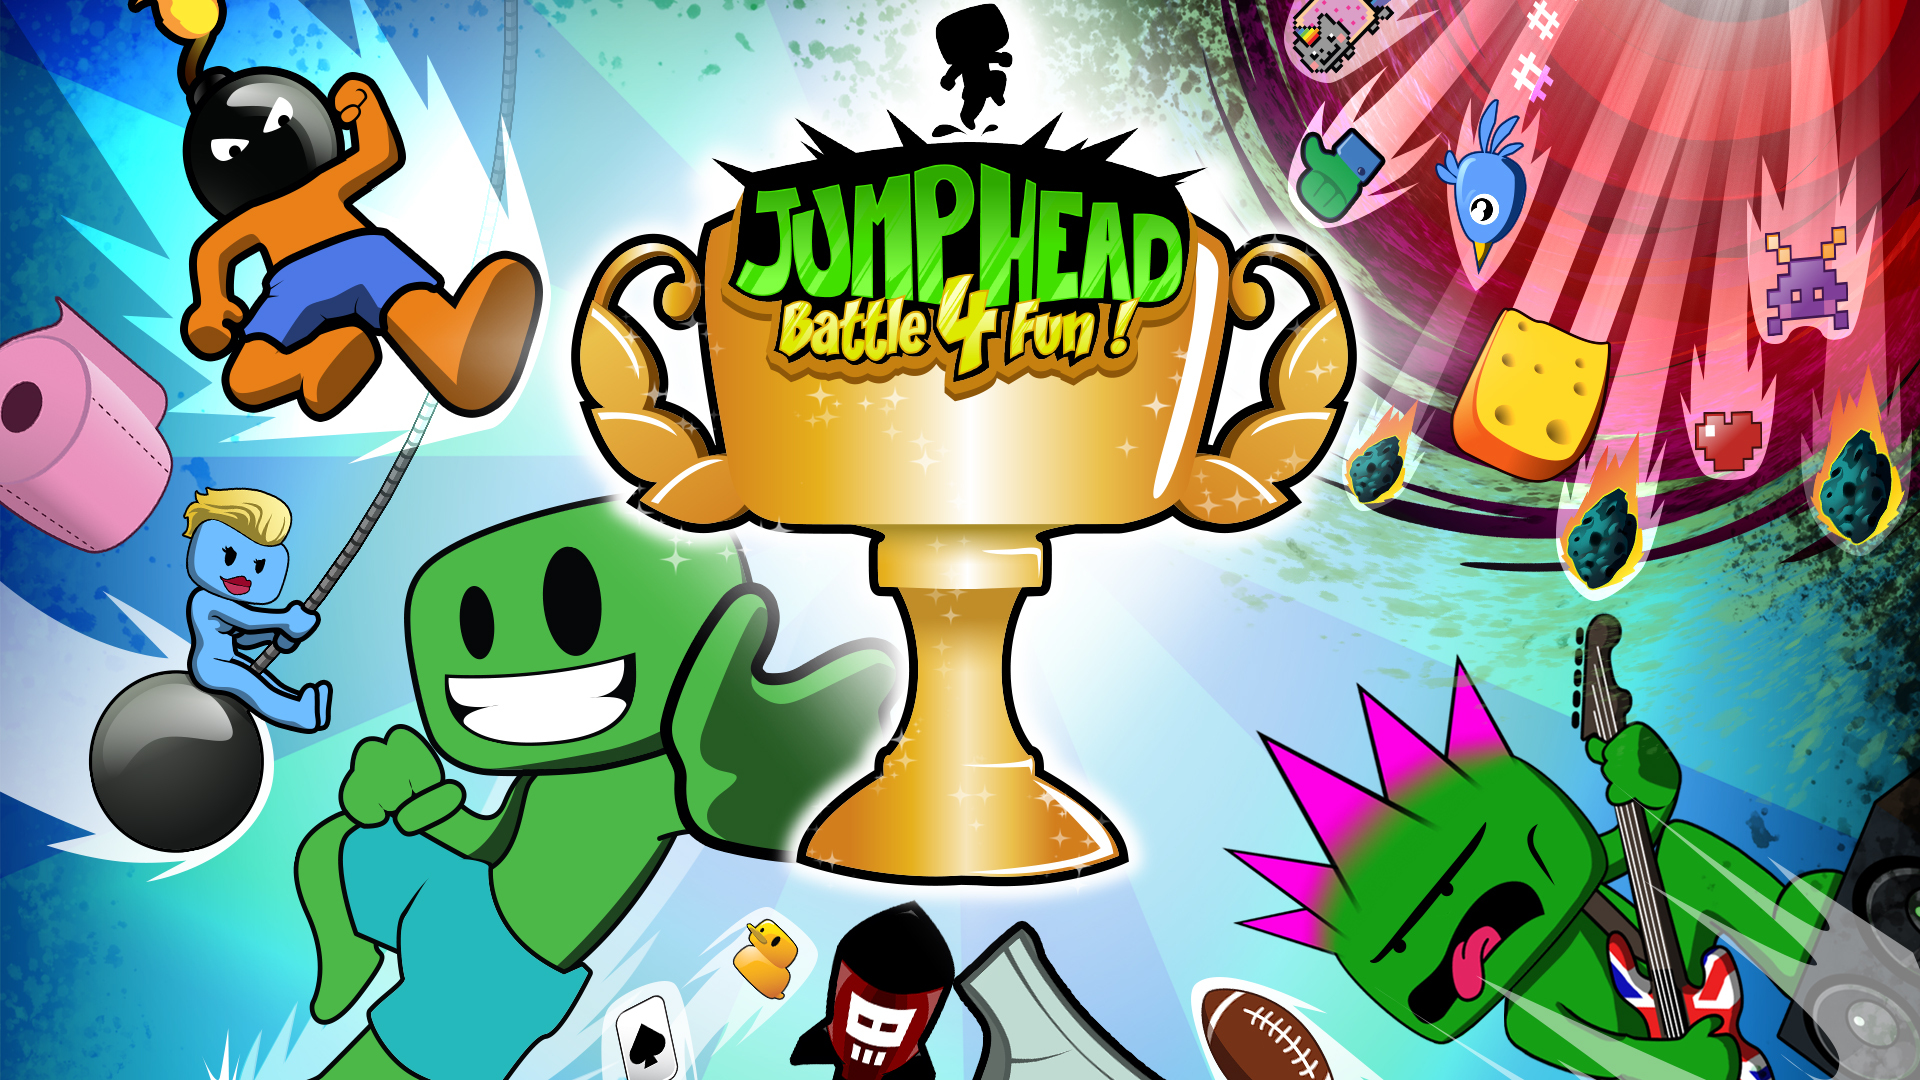 jaquette du jeu vidéo JumpHead: Battle4Fun!